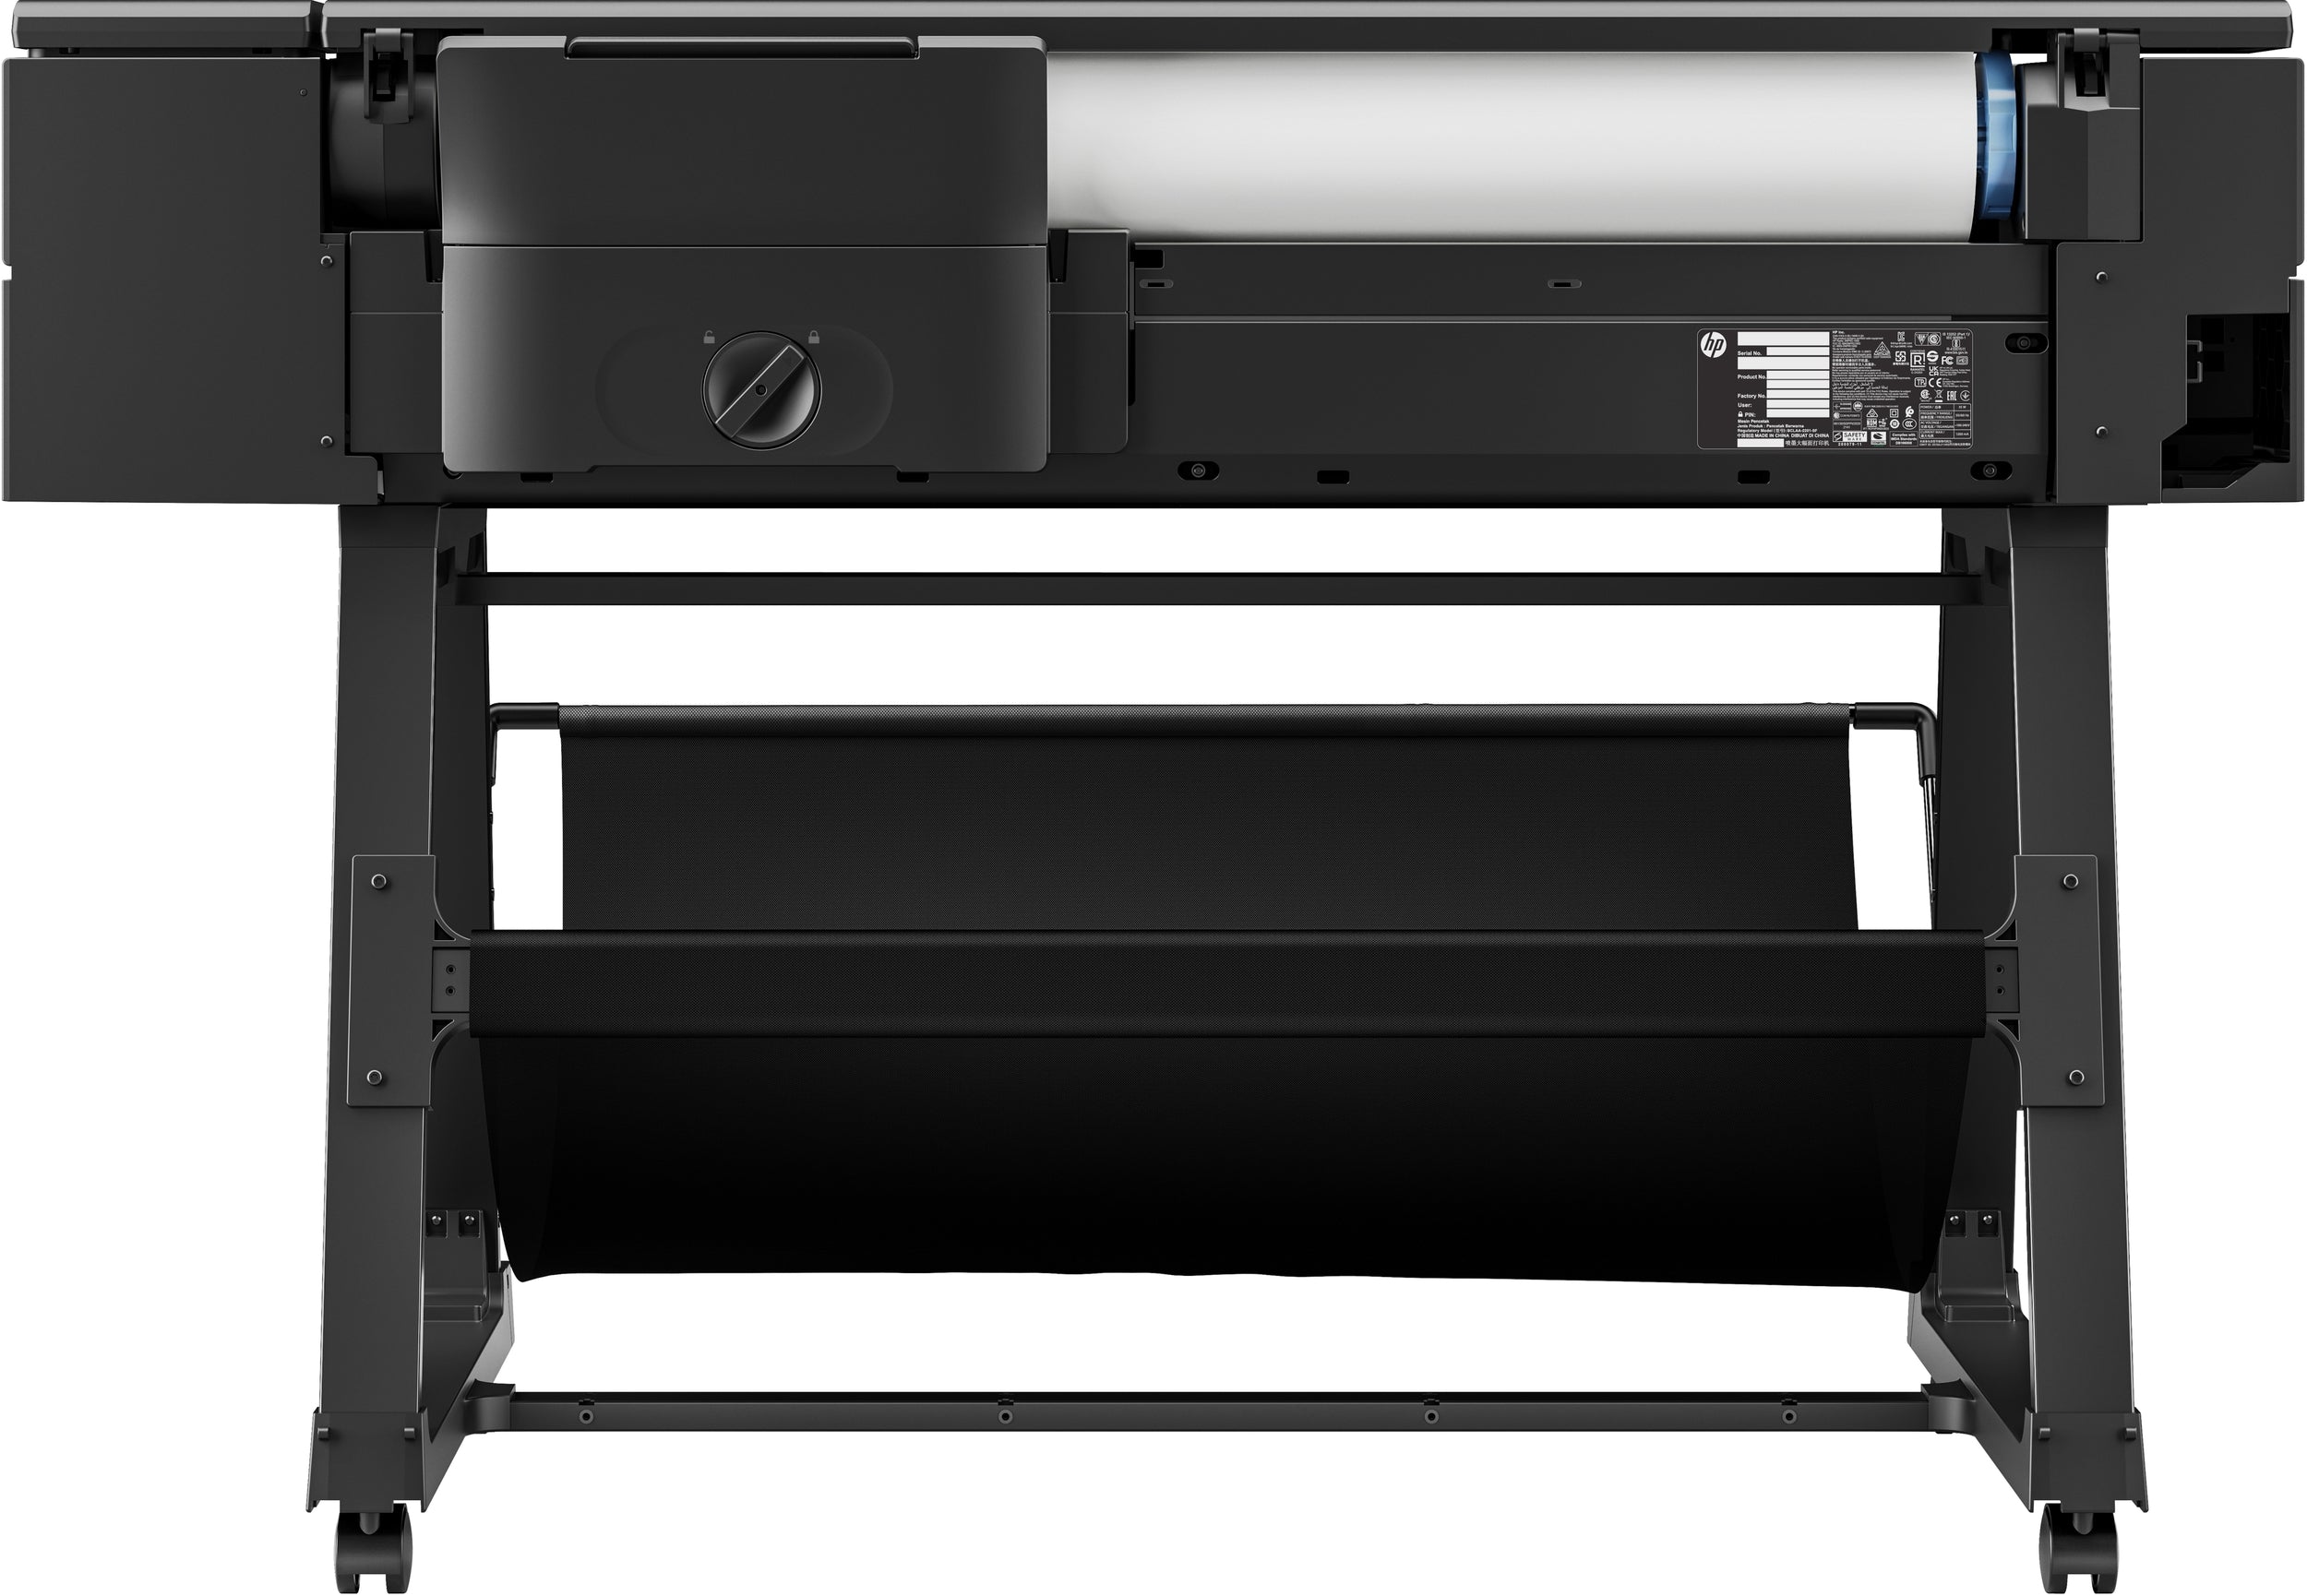 Plotter Hp Designjet T850 Impresora, 36 Pulgadas, 91 Cm, 4 Tintas, Red, Wifi,  2Y9H0A